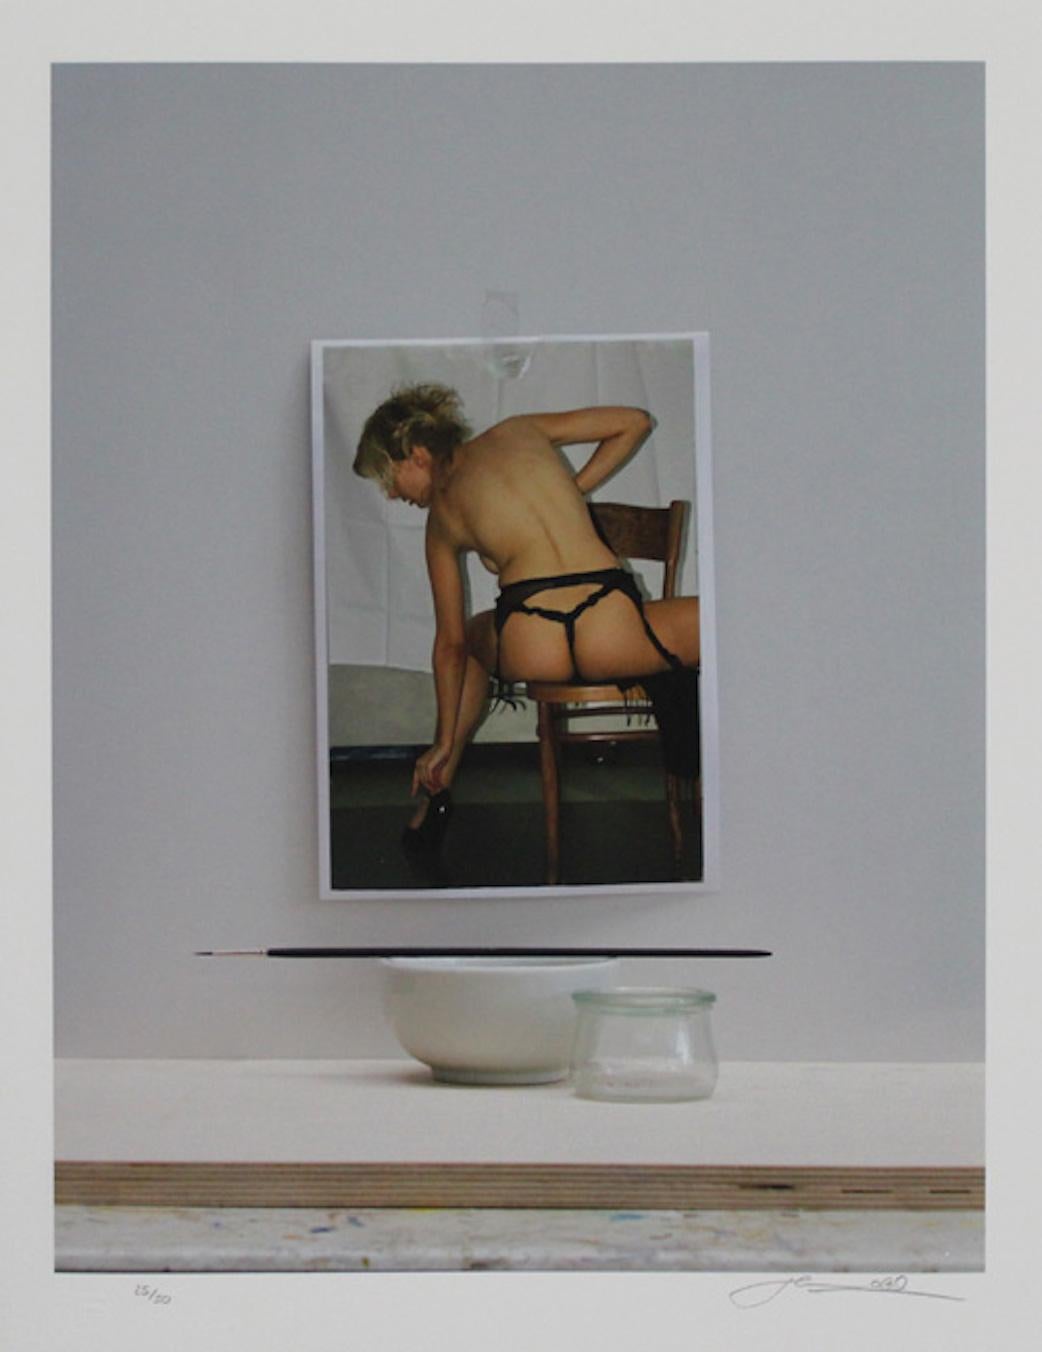 Peter Handel Figurative Print - Still life with Stefanie - Nude